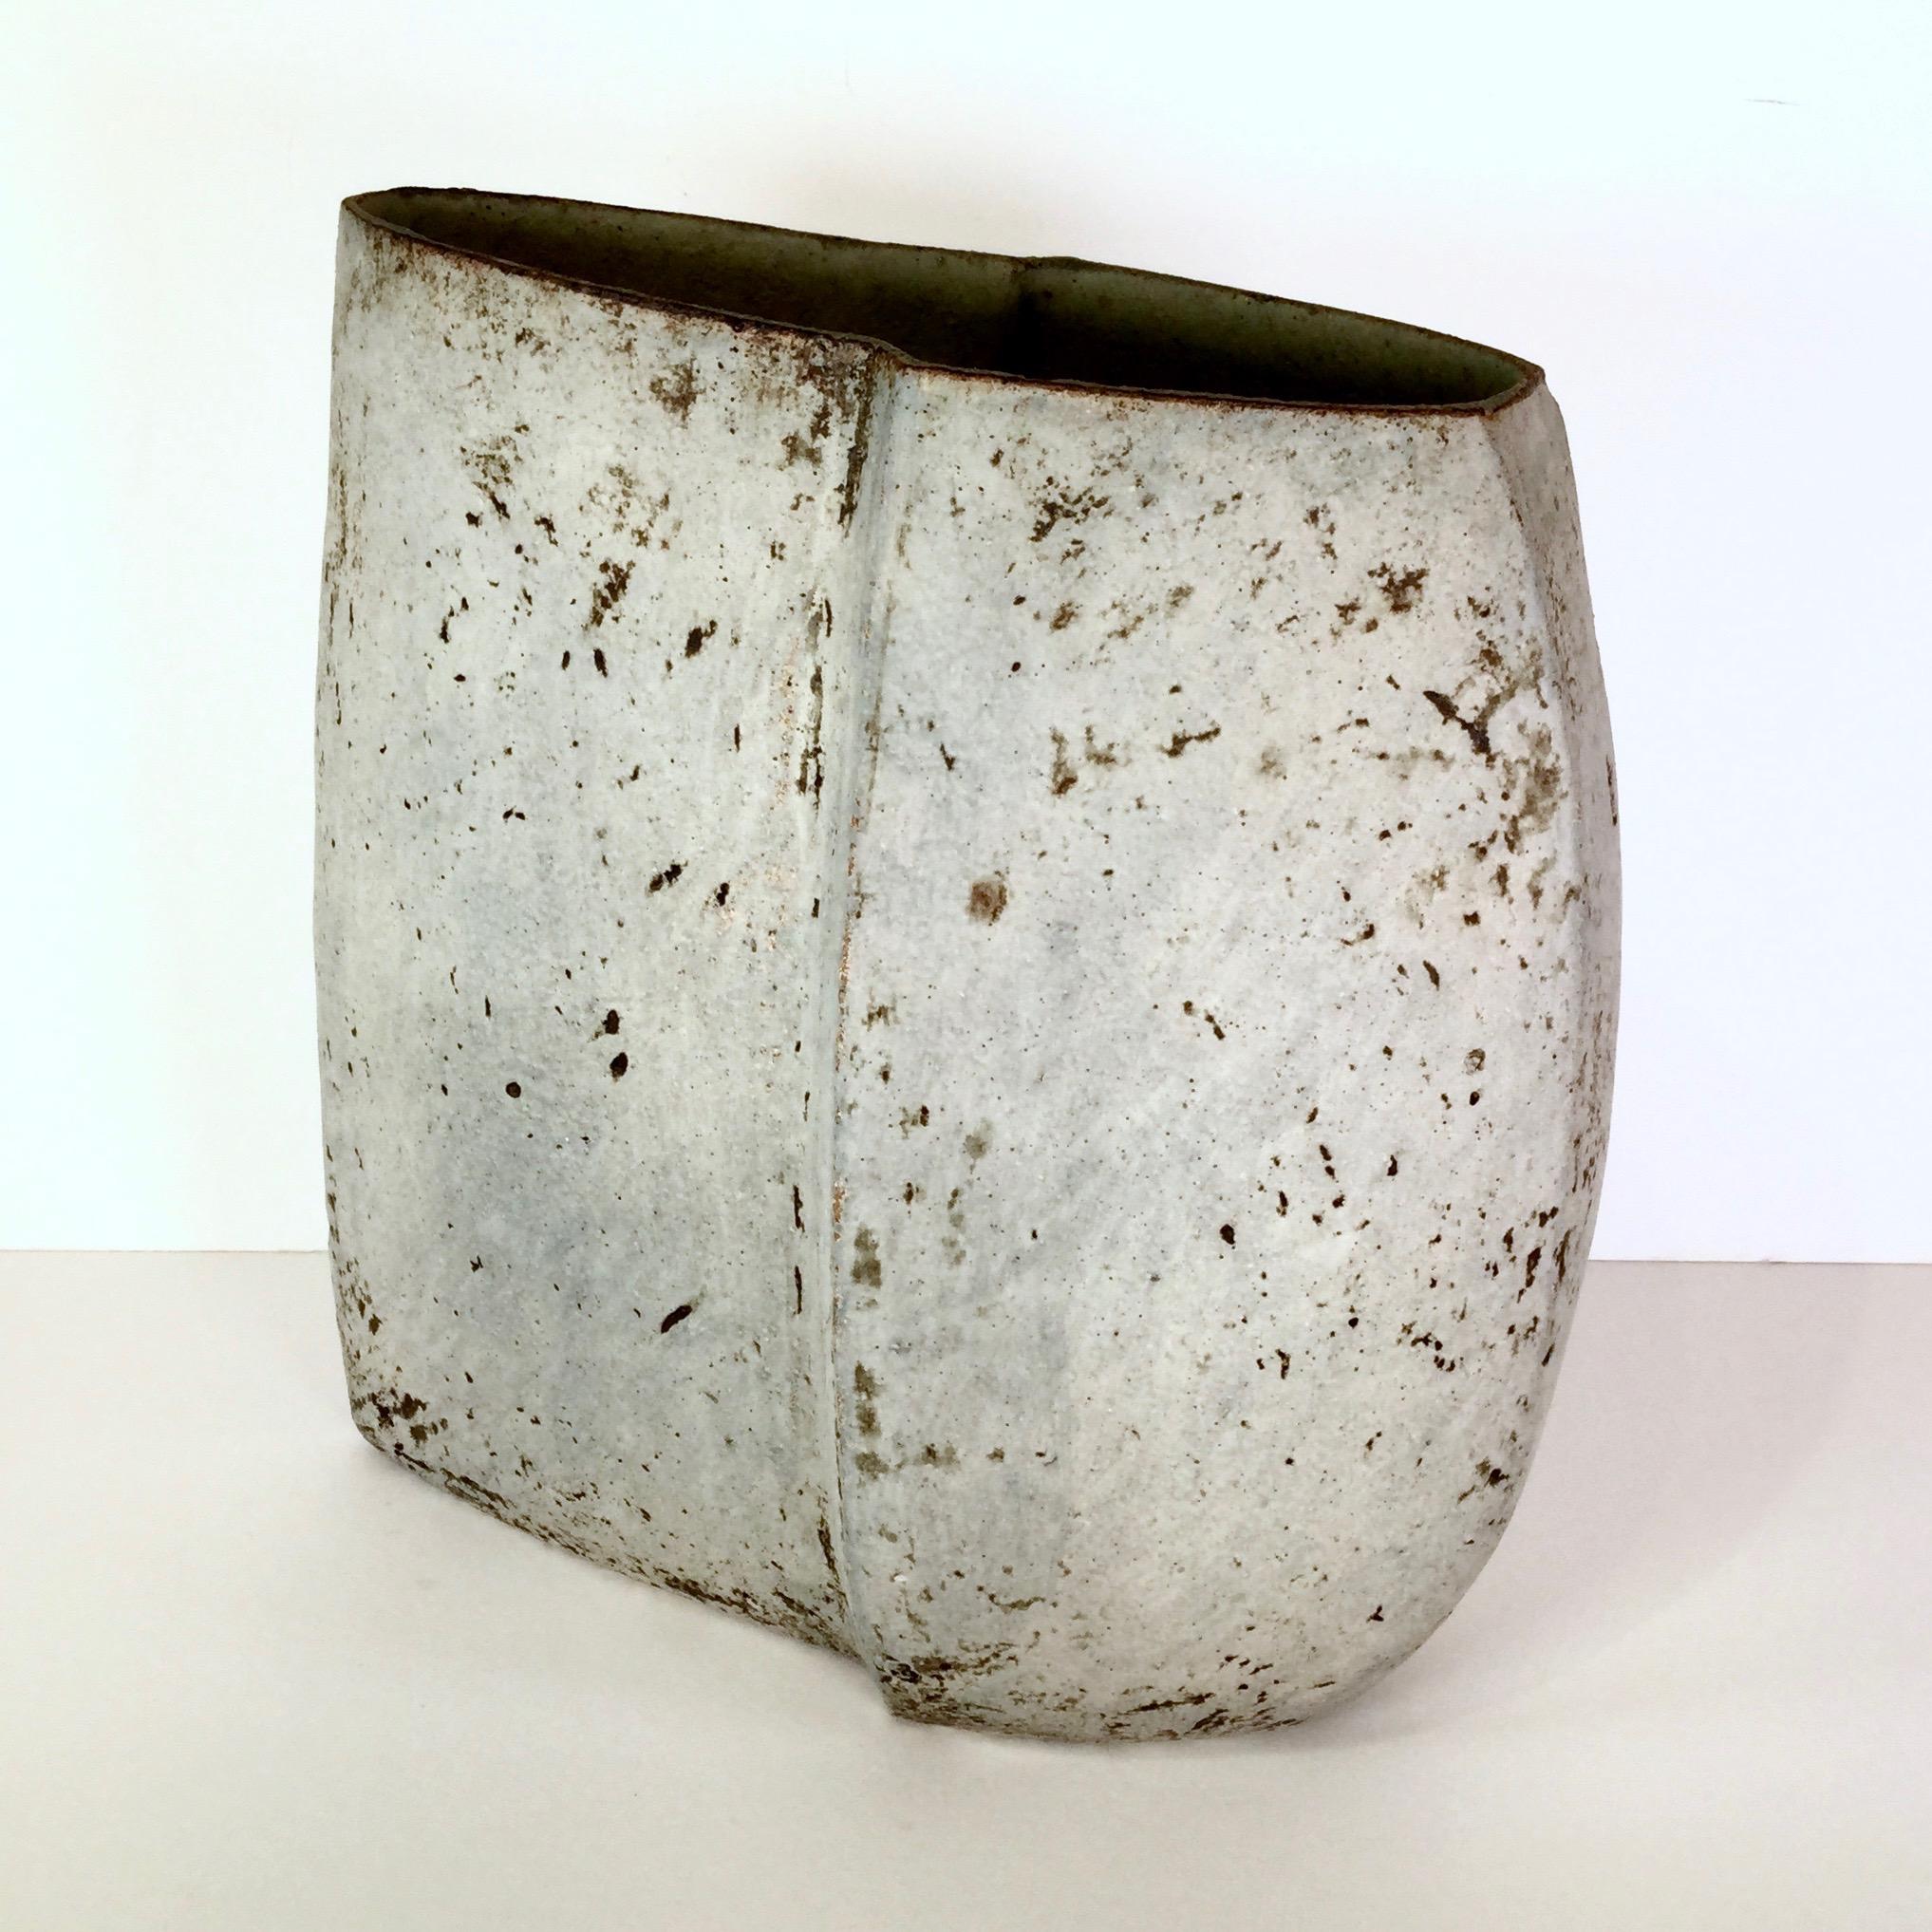 Irregular vessel III - ceramic pot, chalky, dry cream glaze